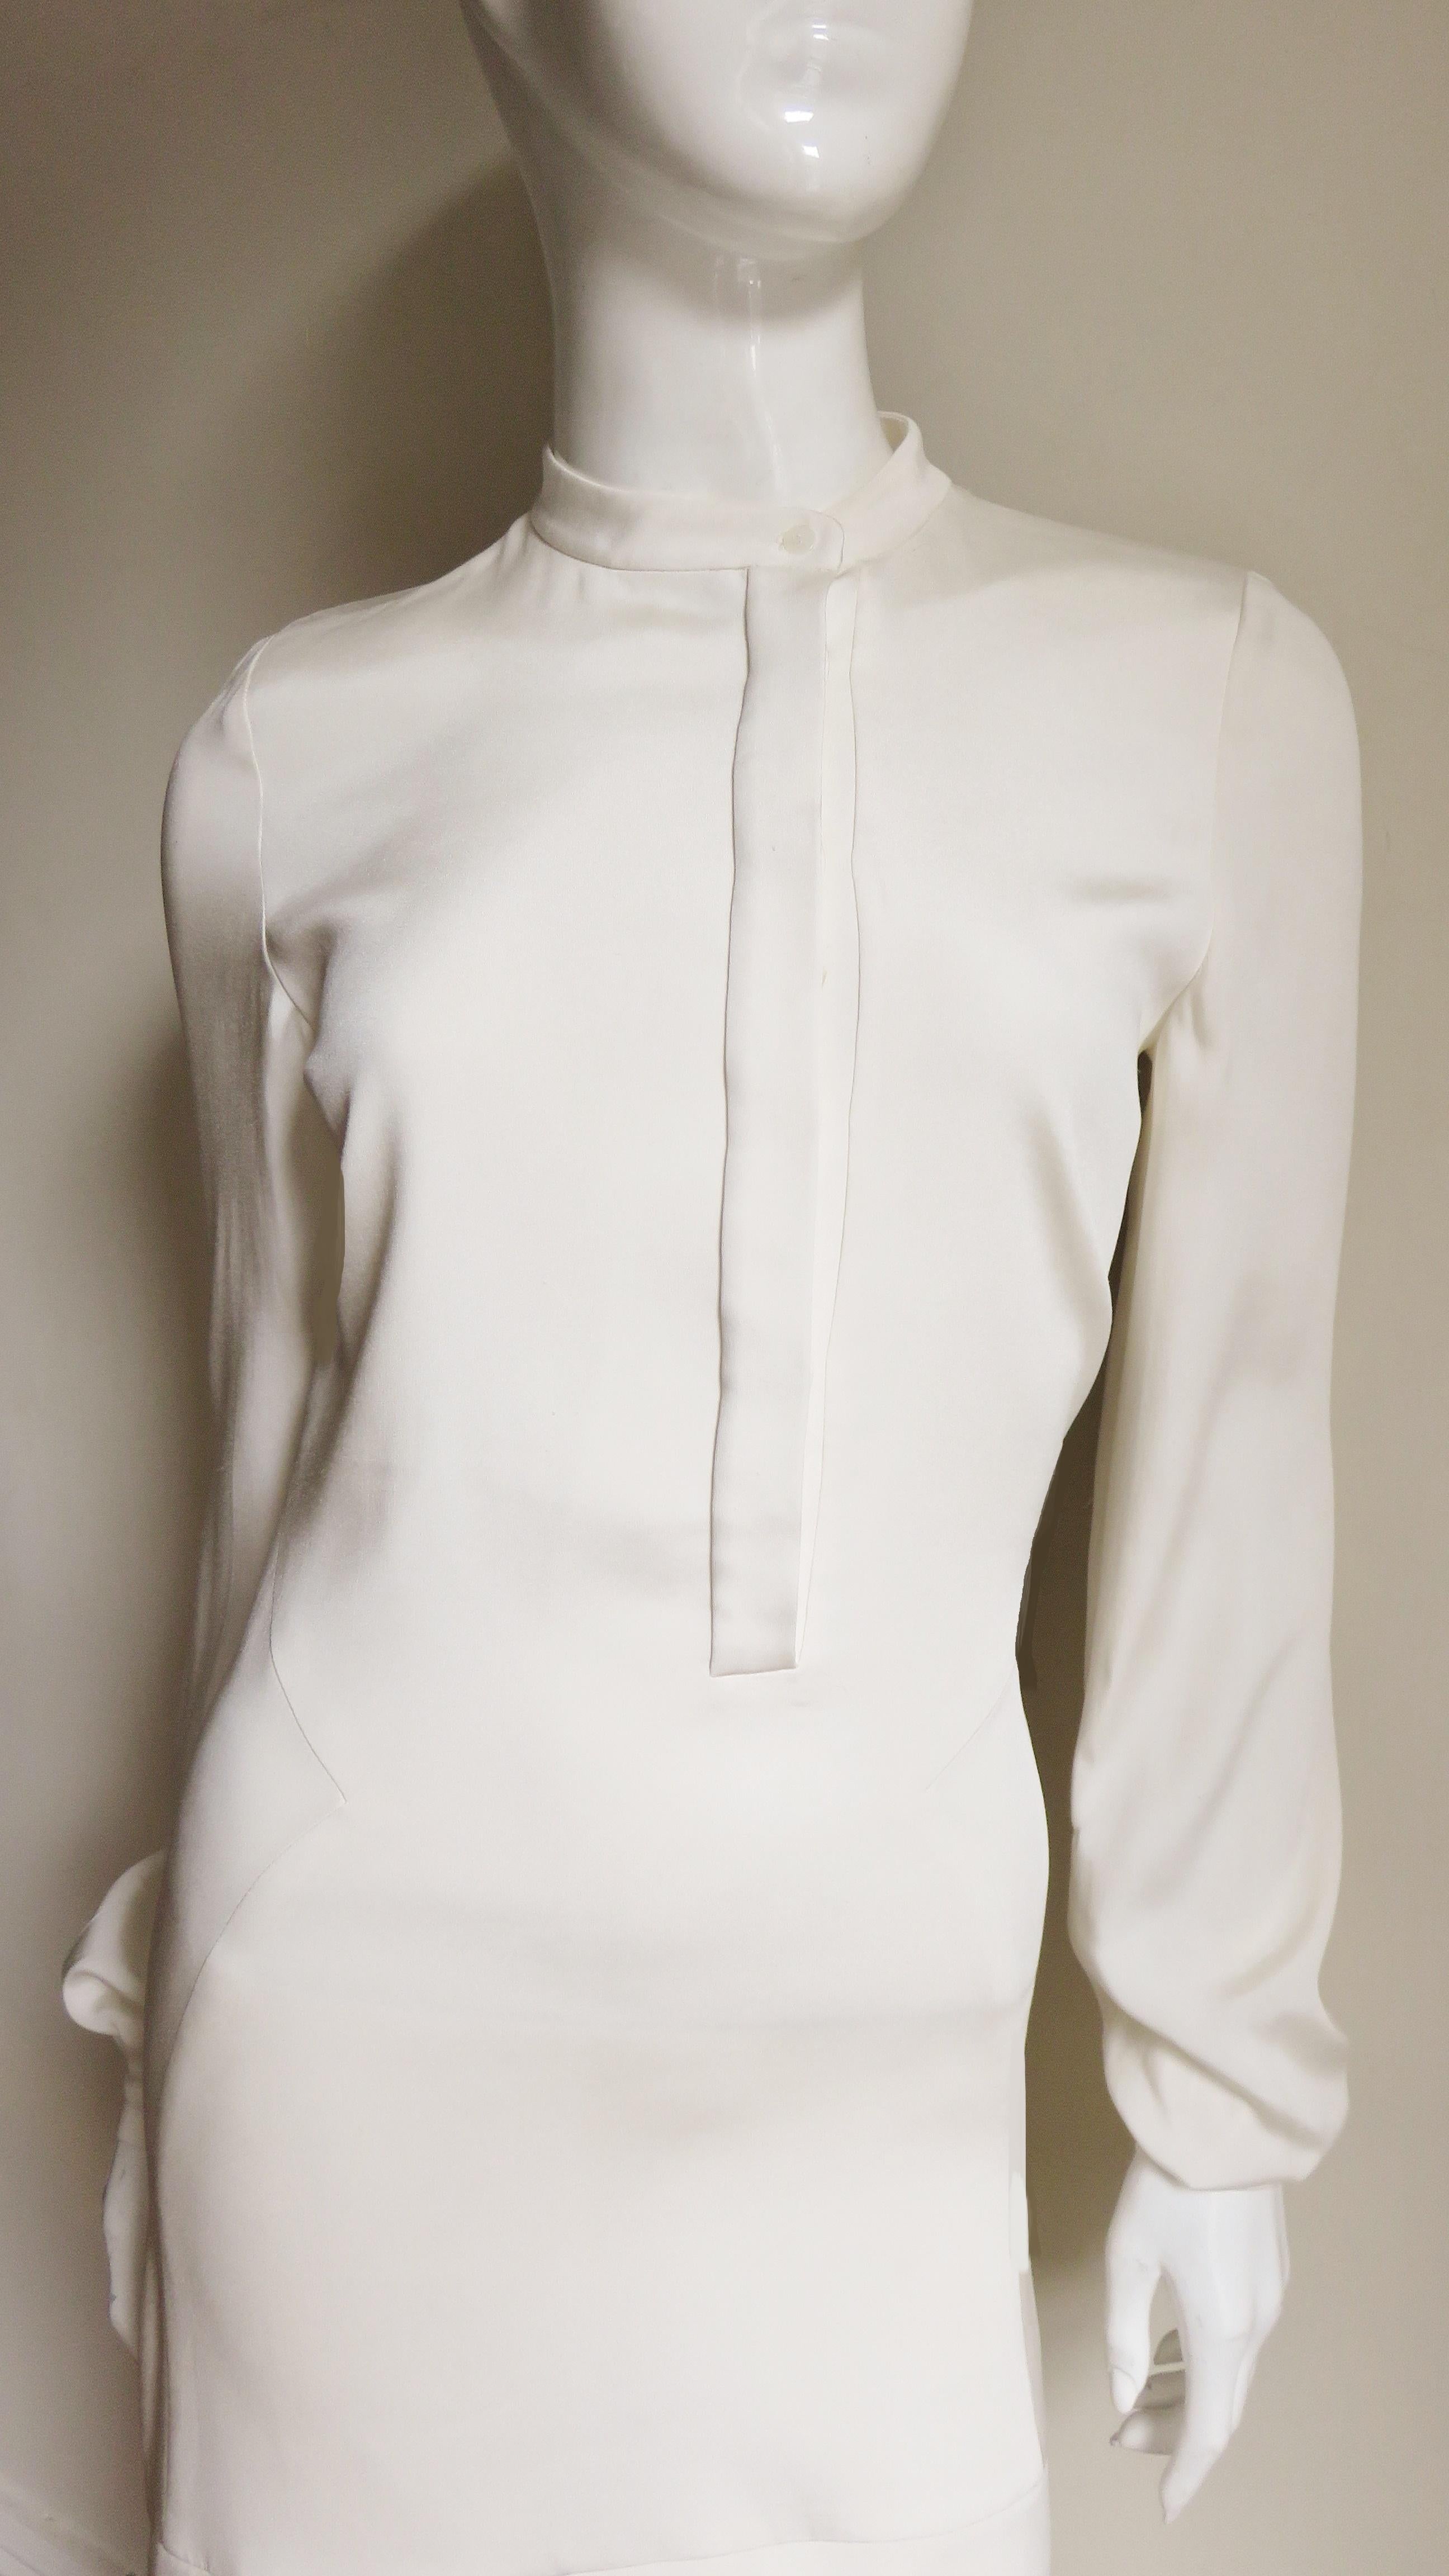 Antonio Berardi New Silk Maxi Dress In Excellent Condition For Sale In Water Mill, NY